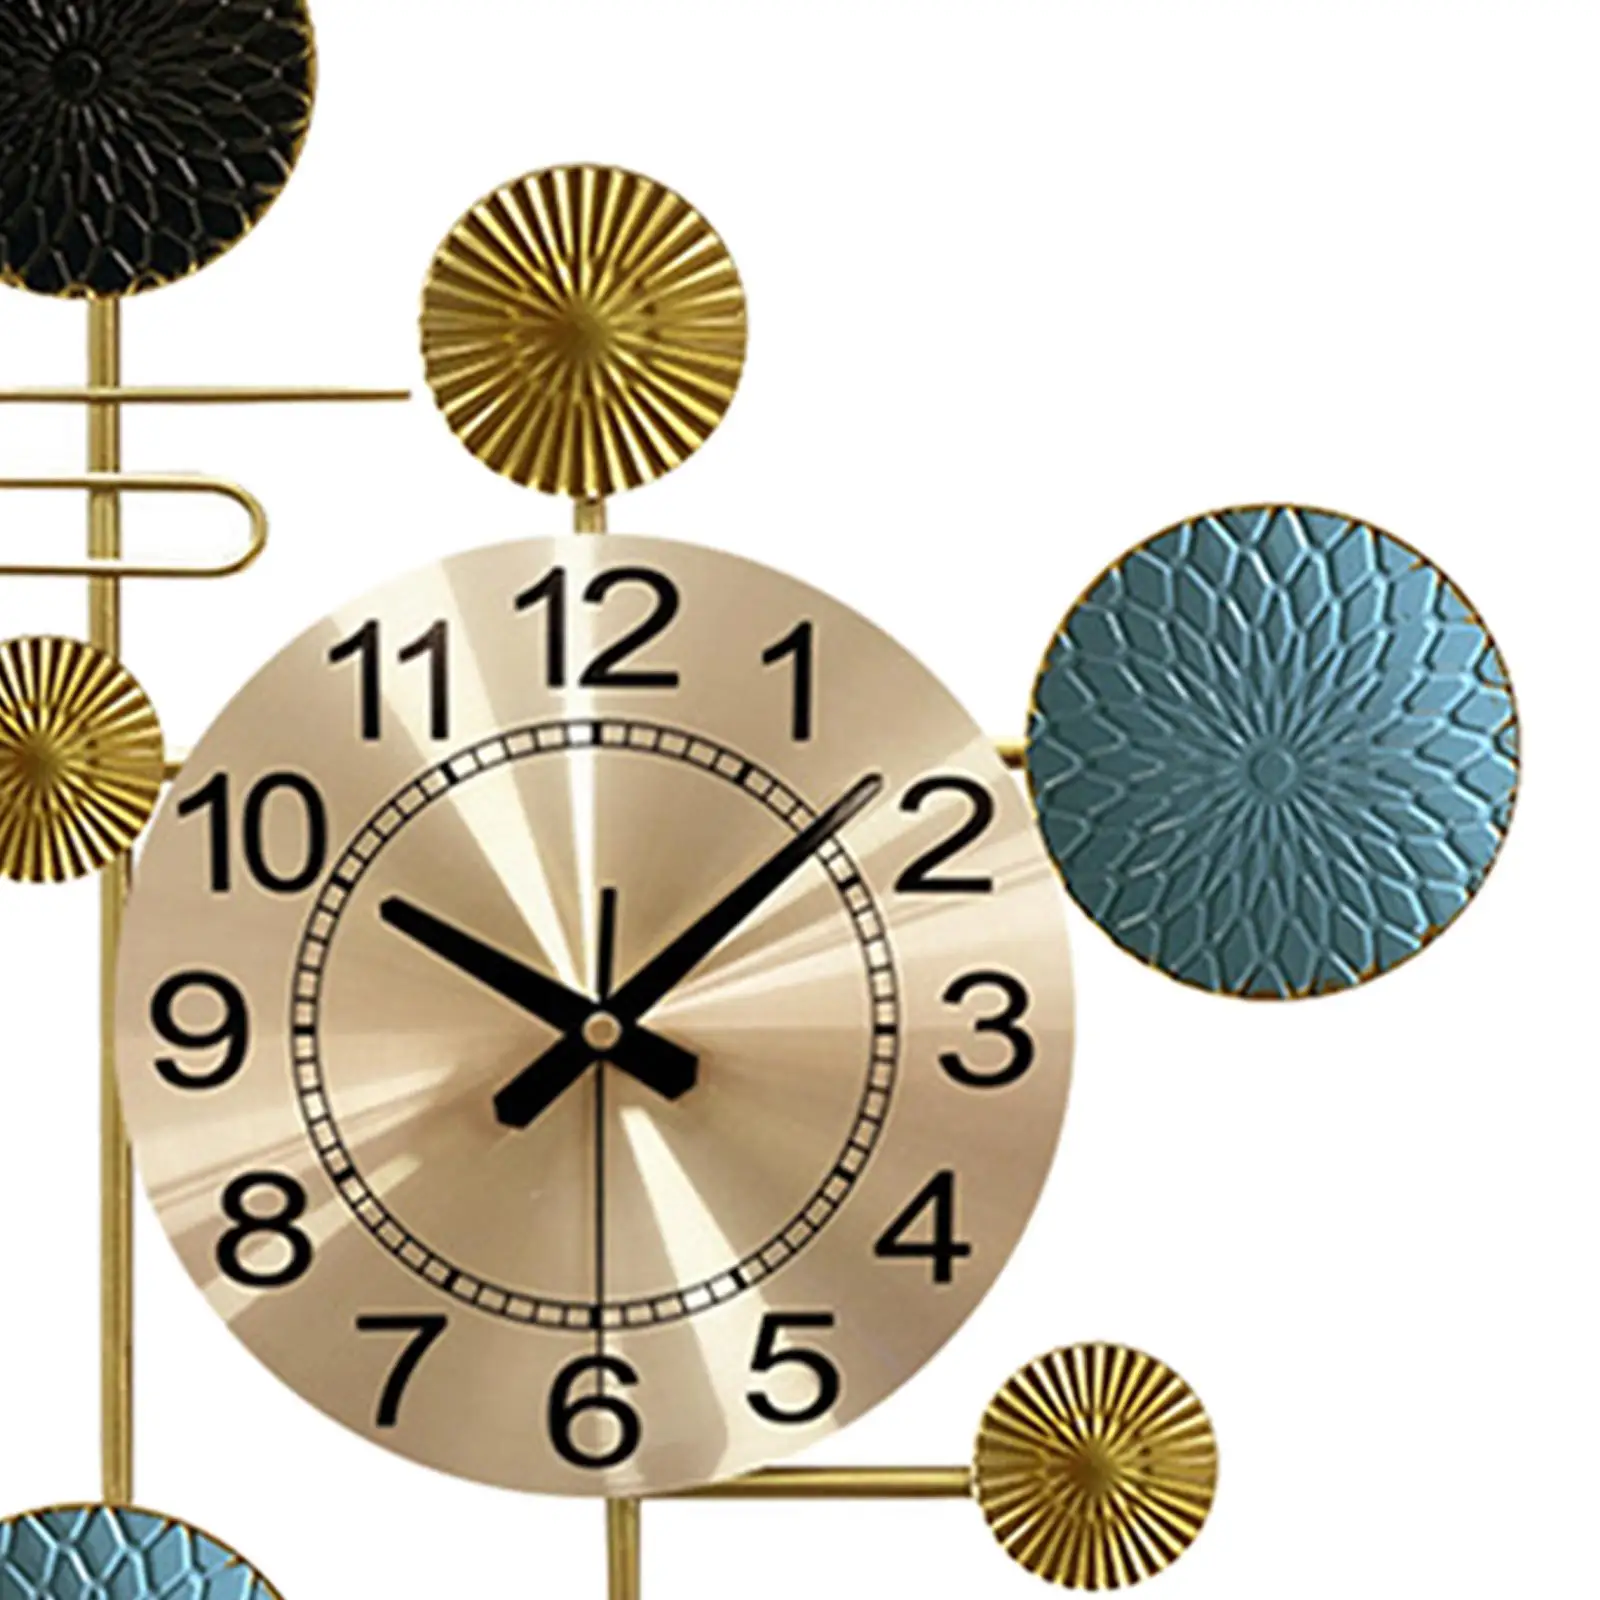 Metal Large Wall Clock Silent Hanging Clocks for Living Room Bedroom Office